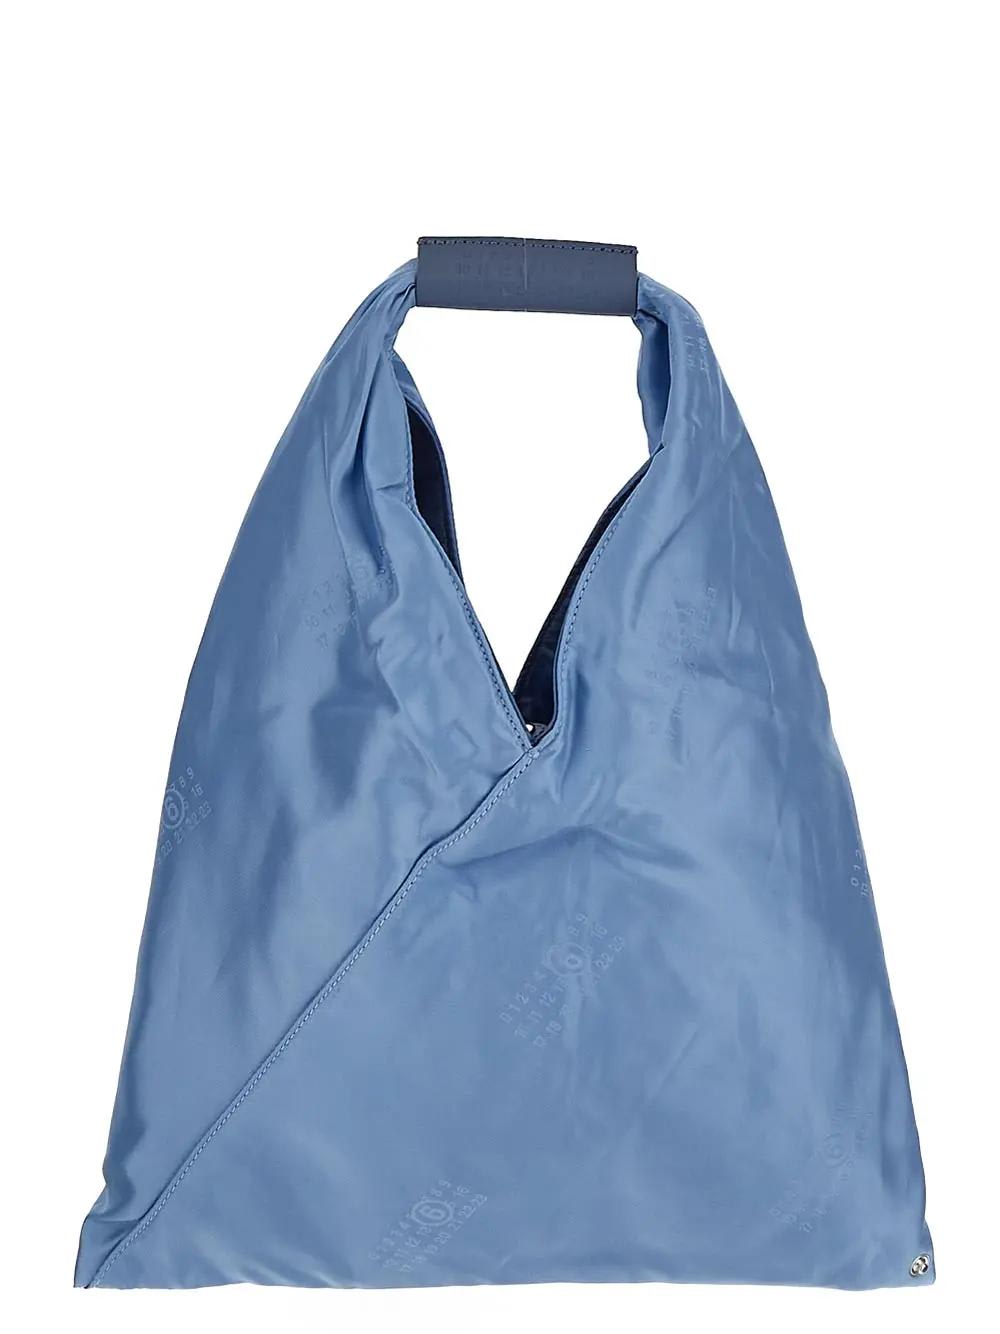 Japanese Tote Bag